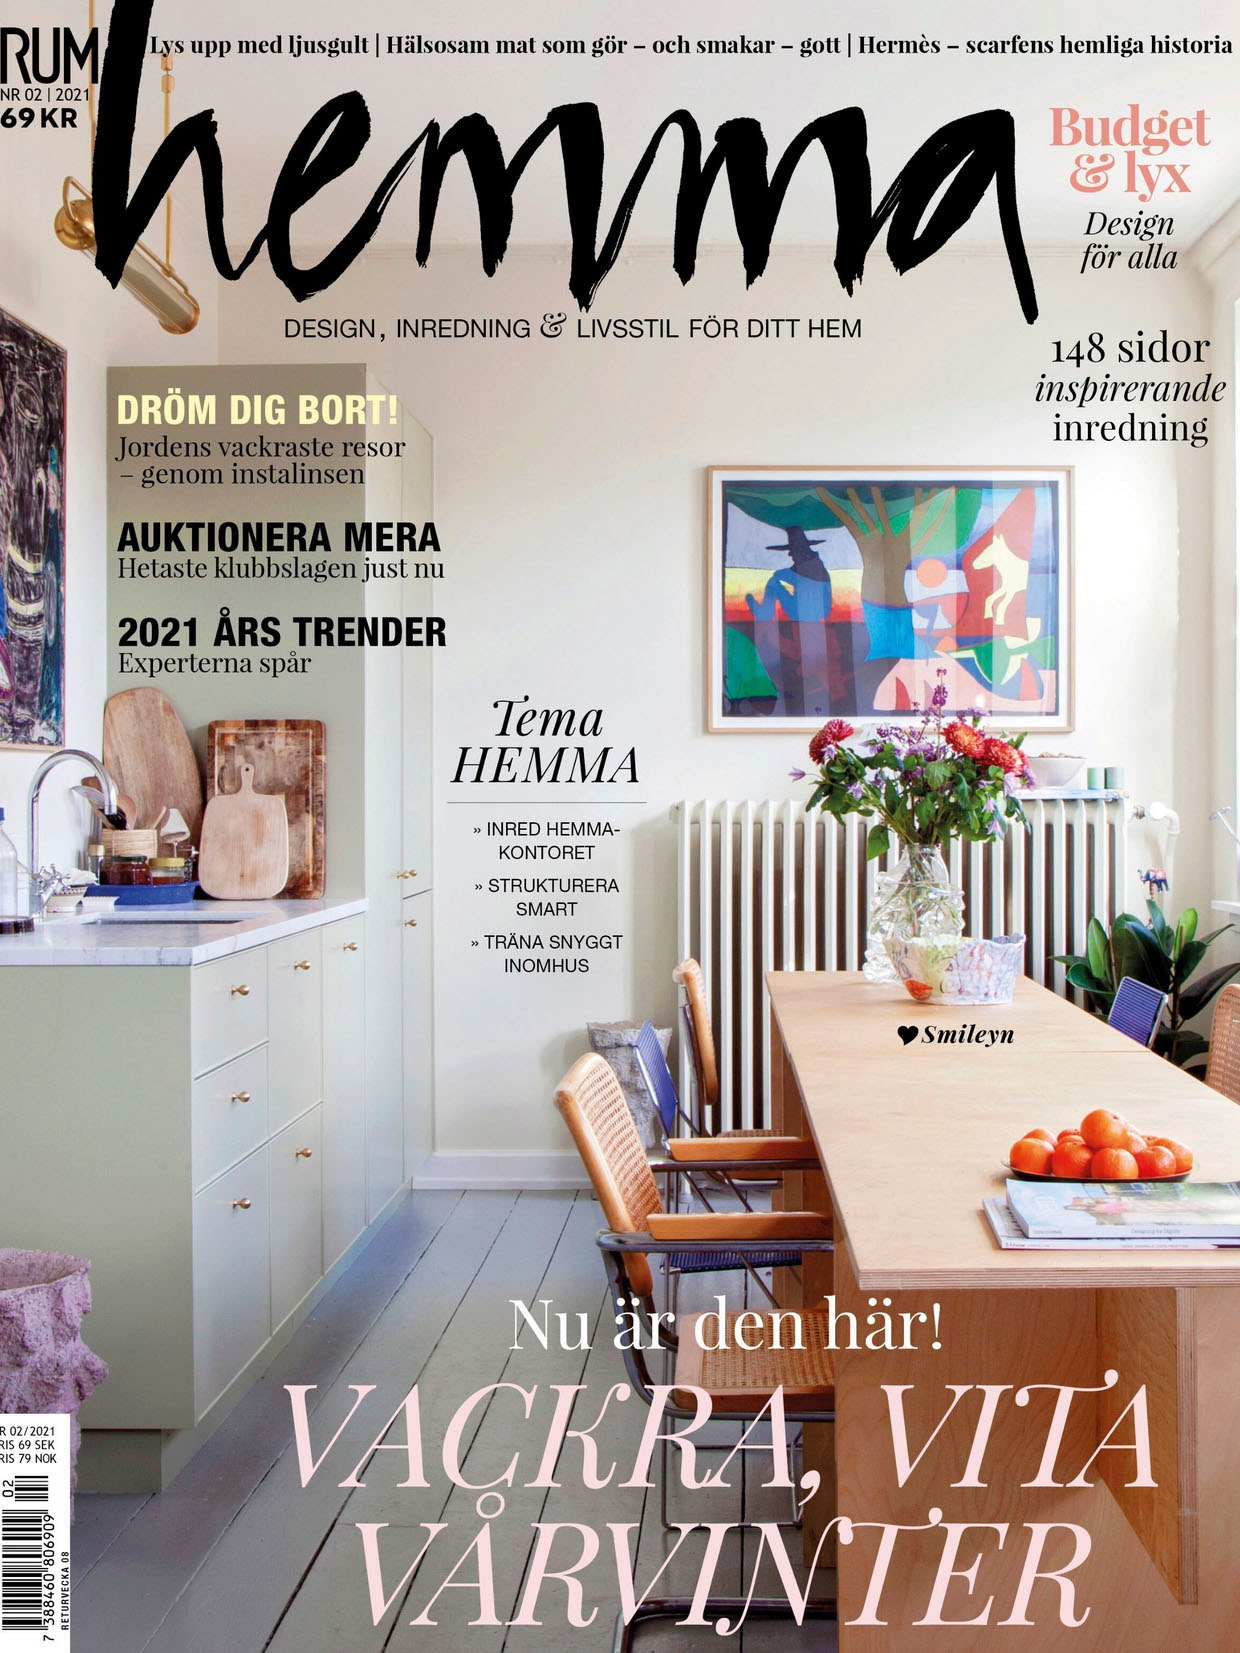 《Rum Hemma》瑞典版时尚家居杂志2021年02月号